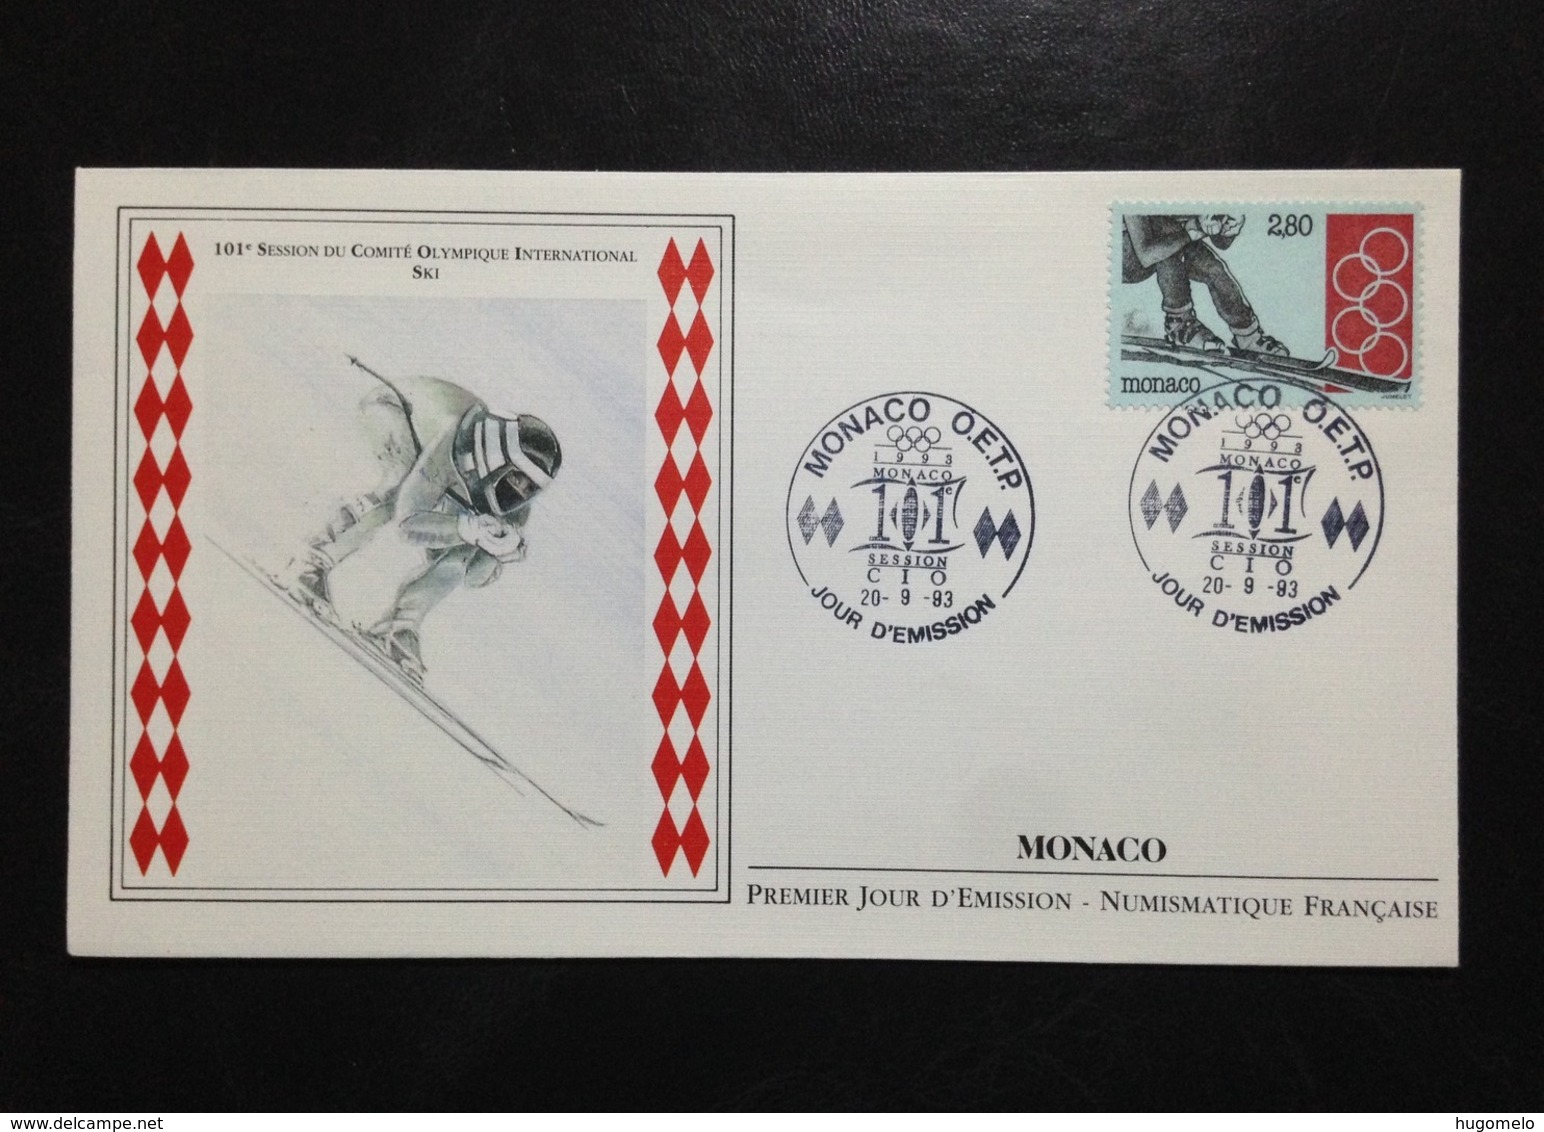 Monaco, Uncirculated FDC, SPORTS, SKI, 1993 - Covers & Documents